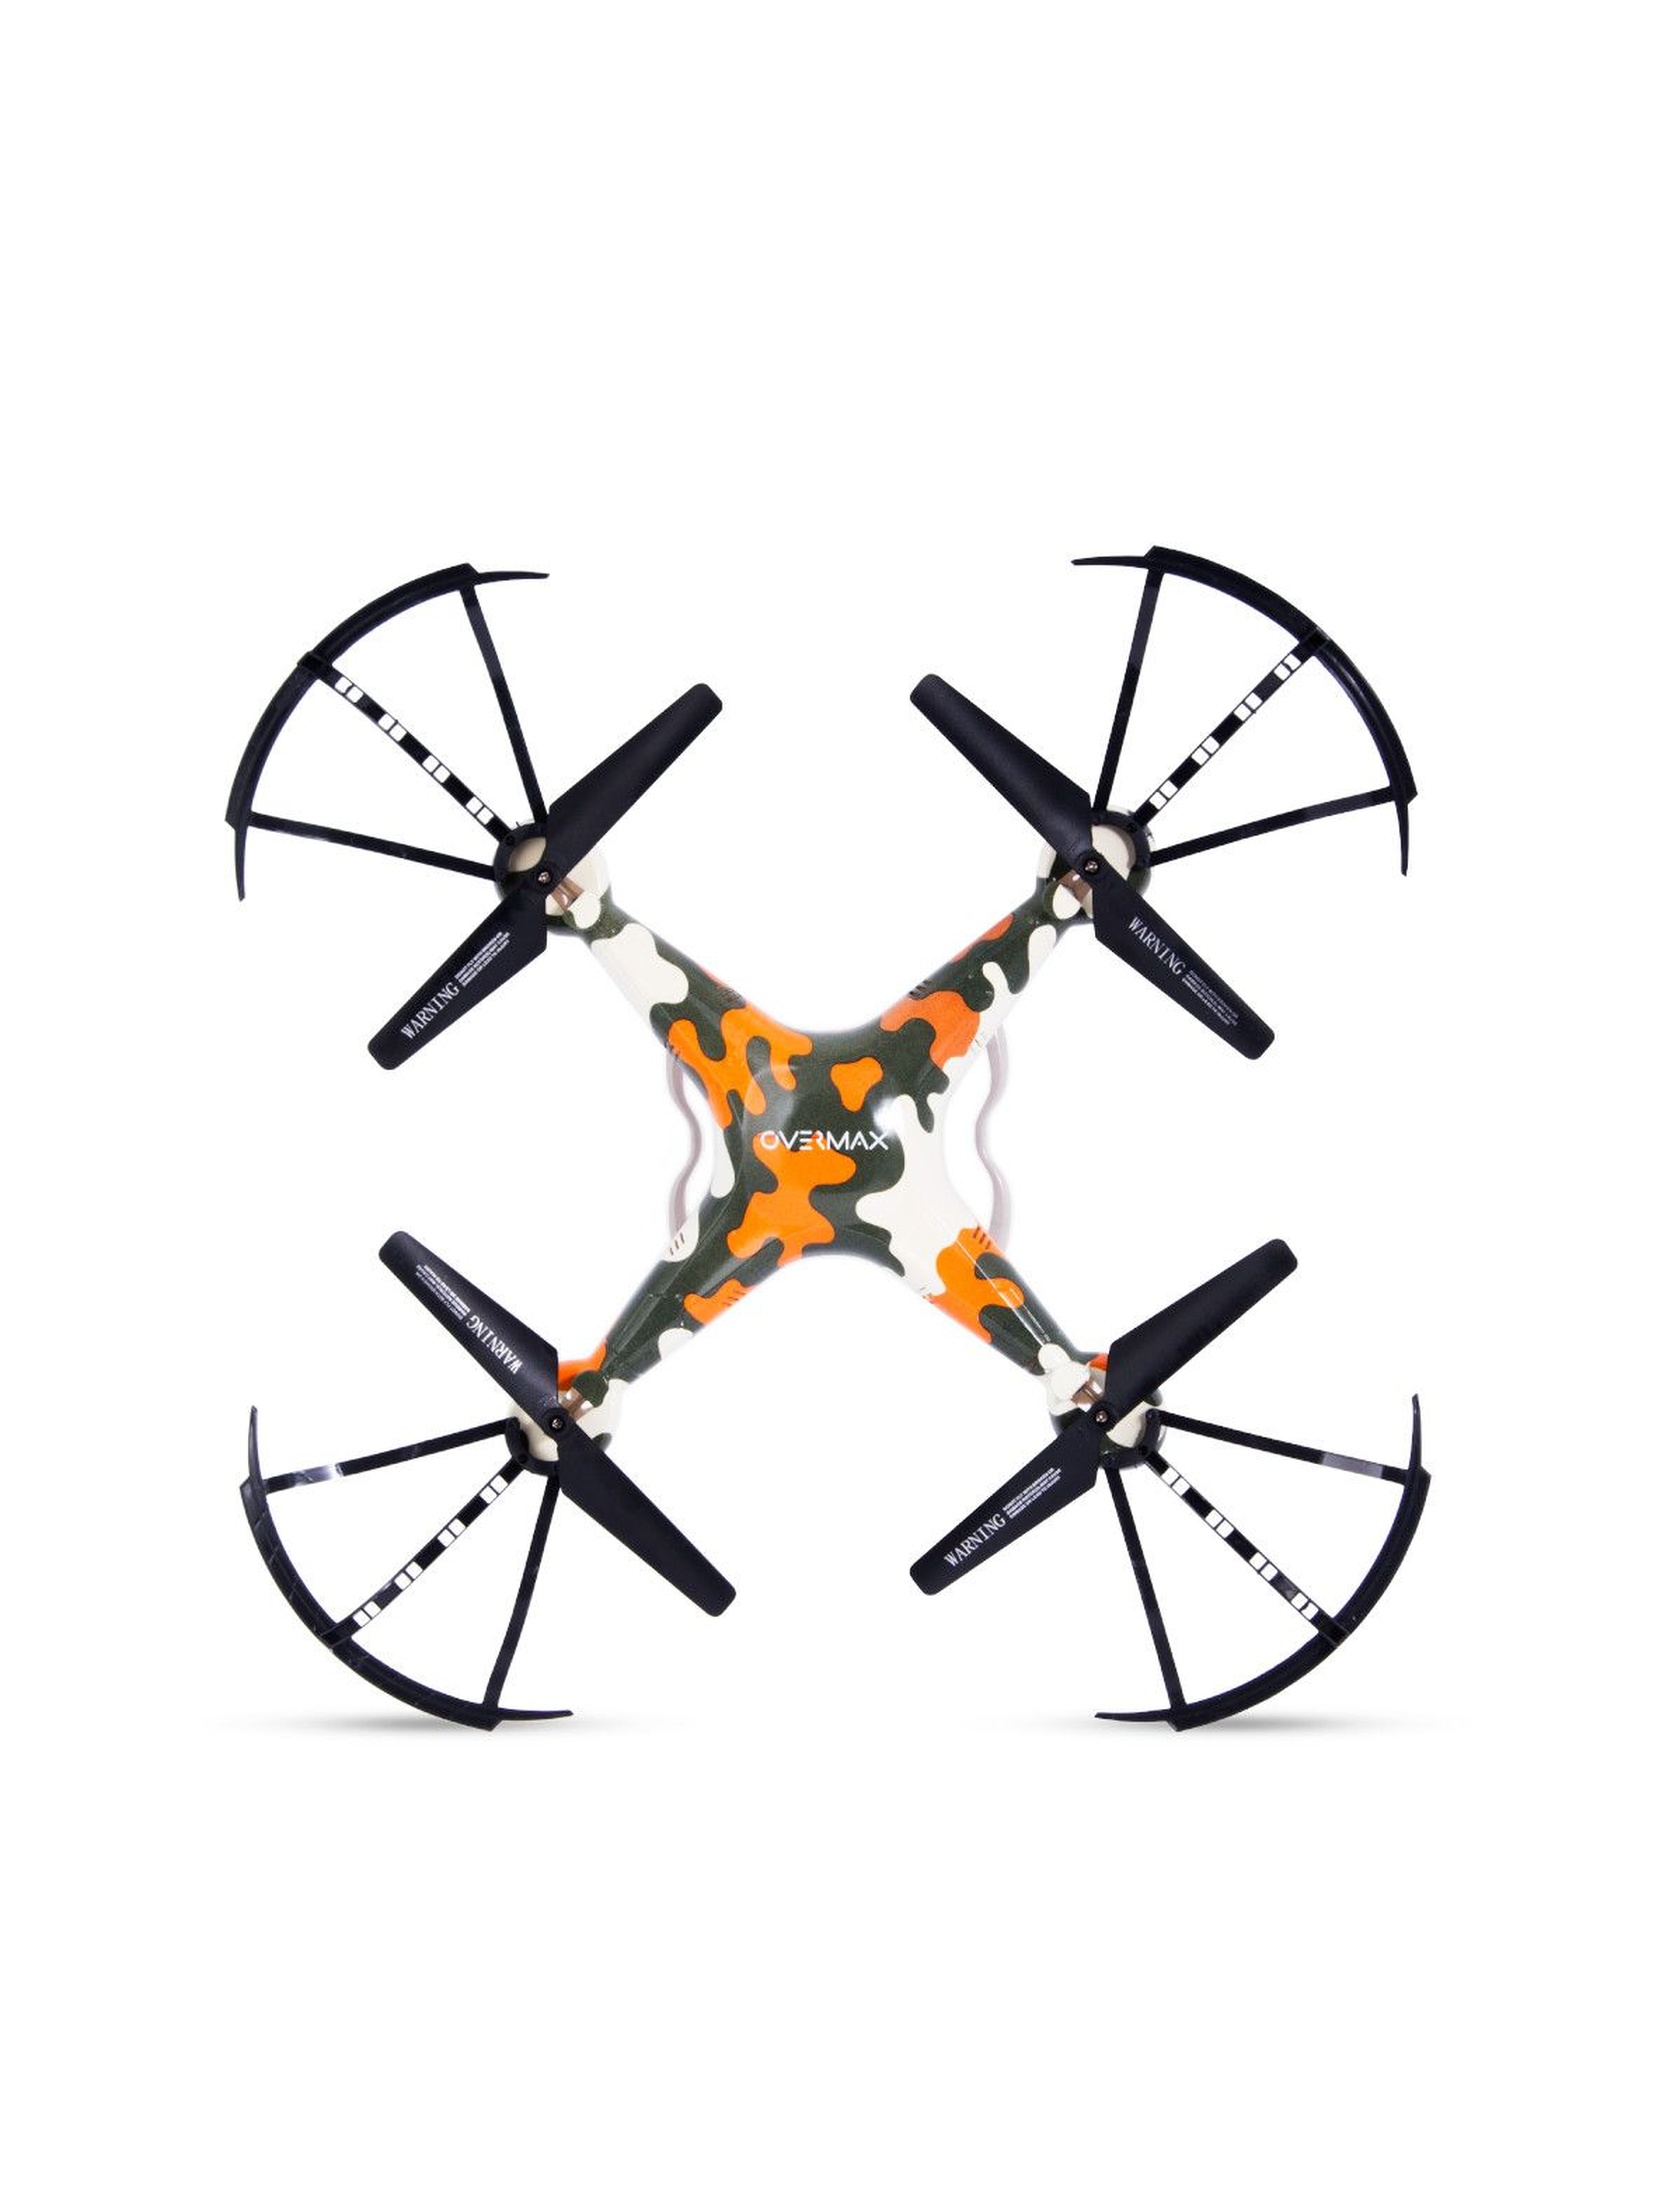 Duży Dron OVERMAX X Bee Drone 15